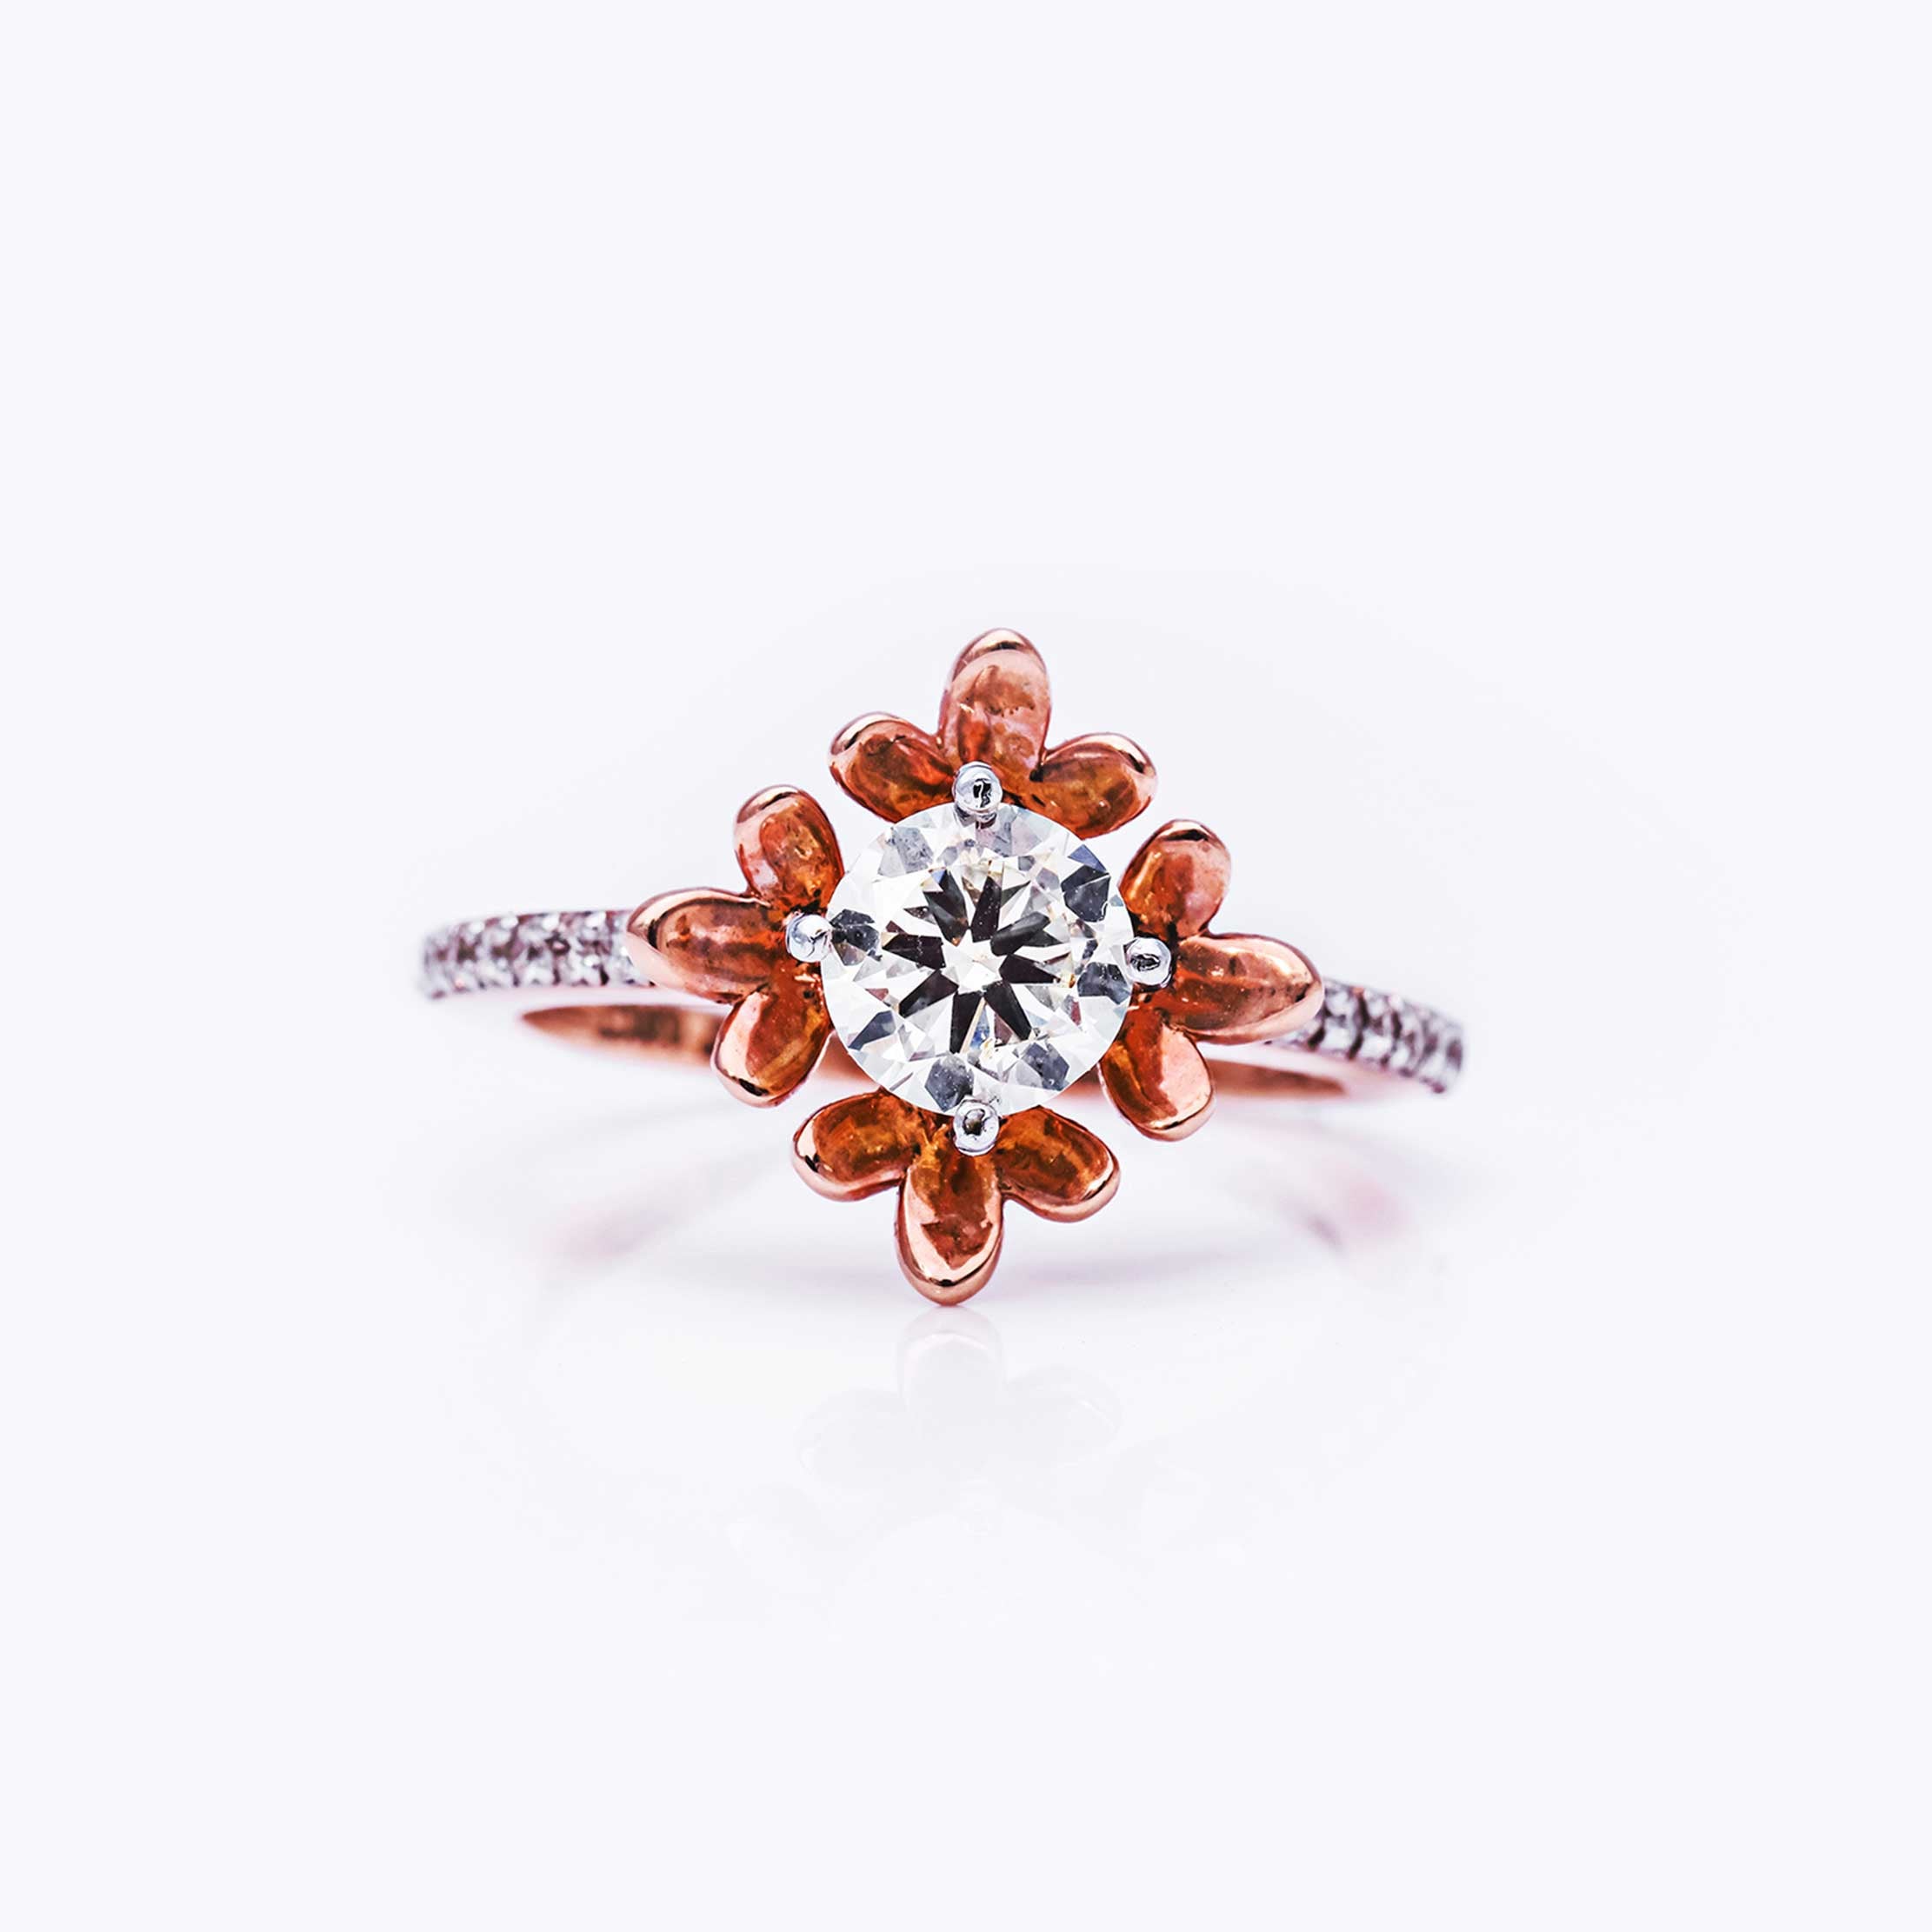 Petals Embrace Diamond Ring